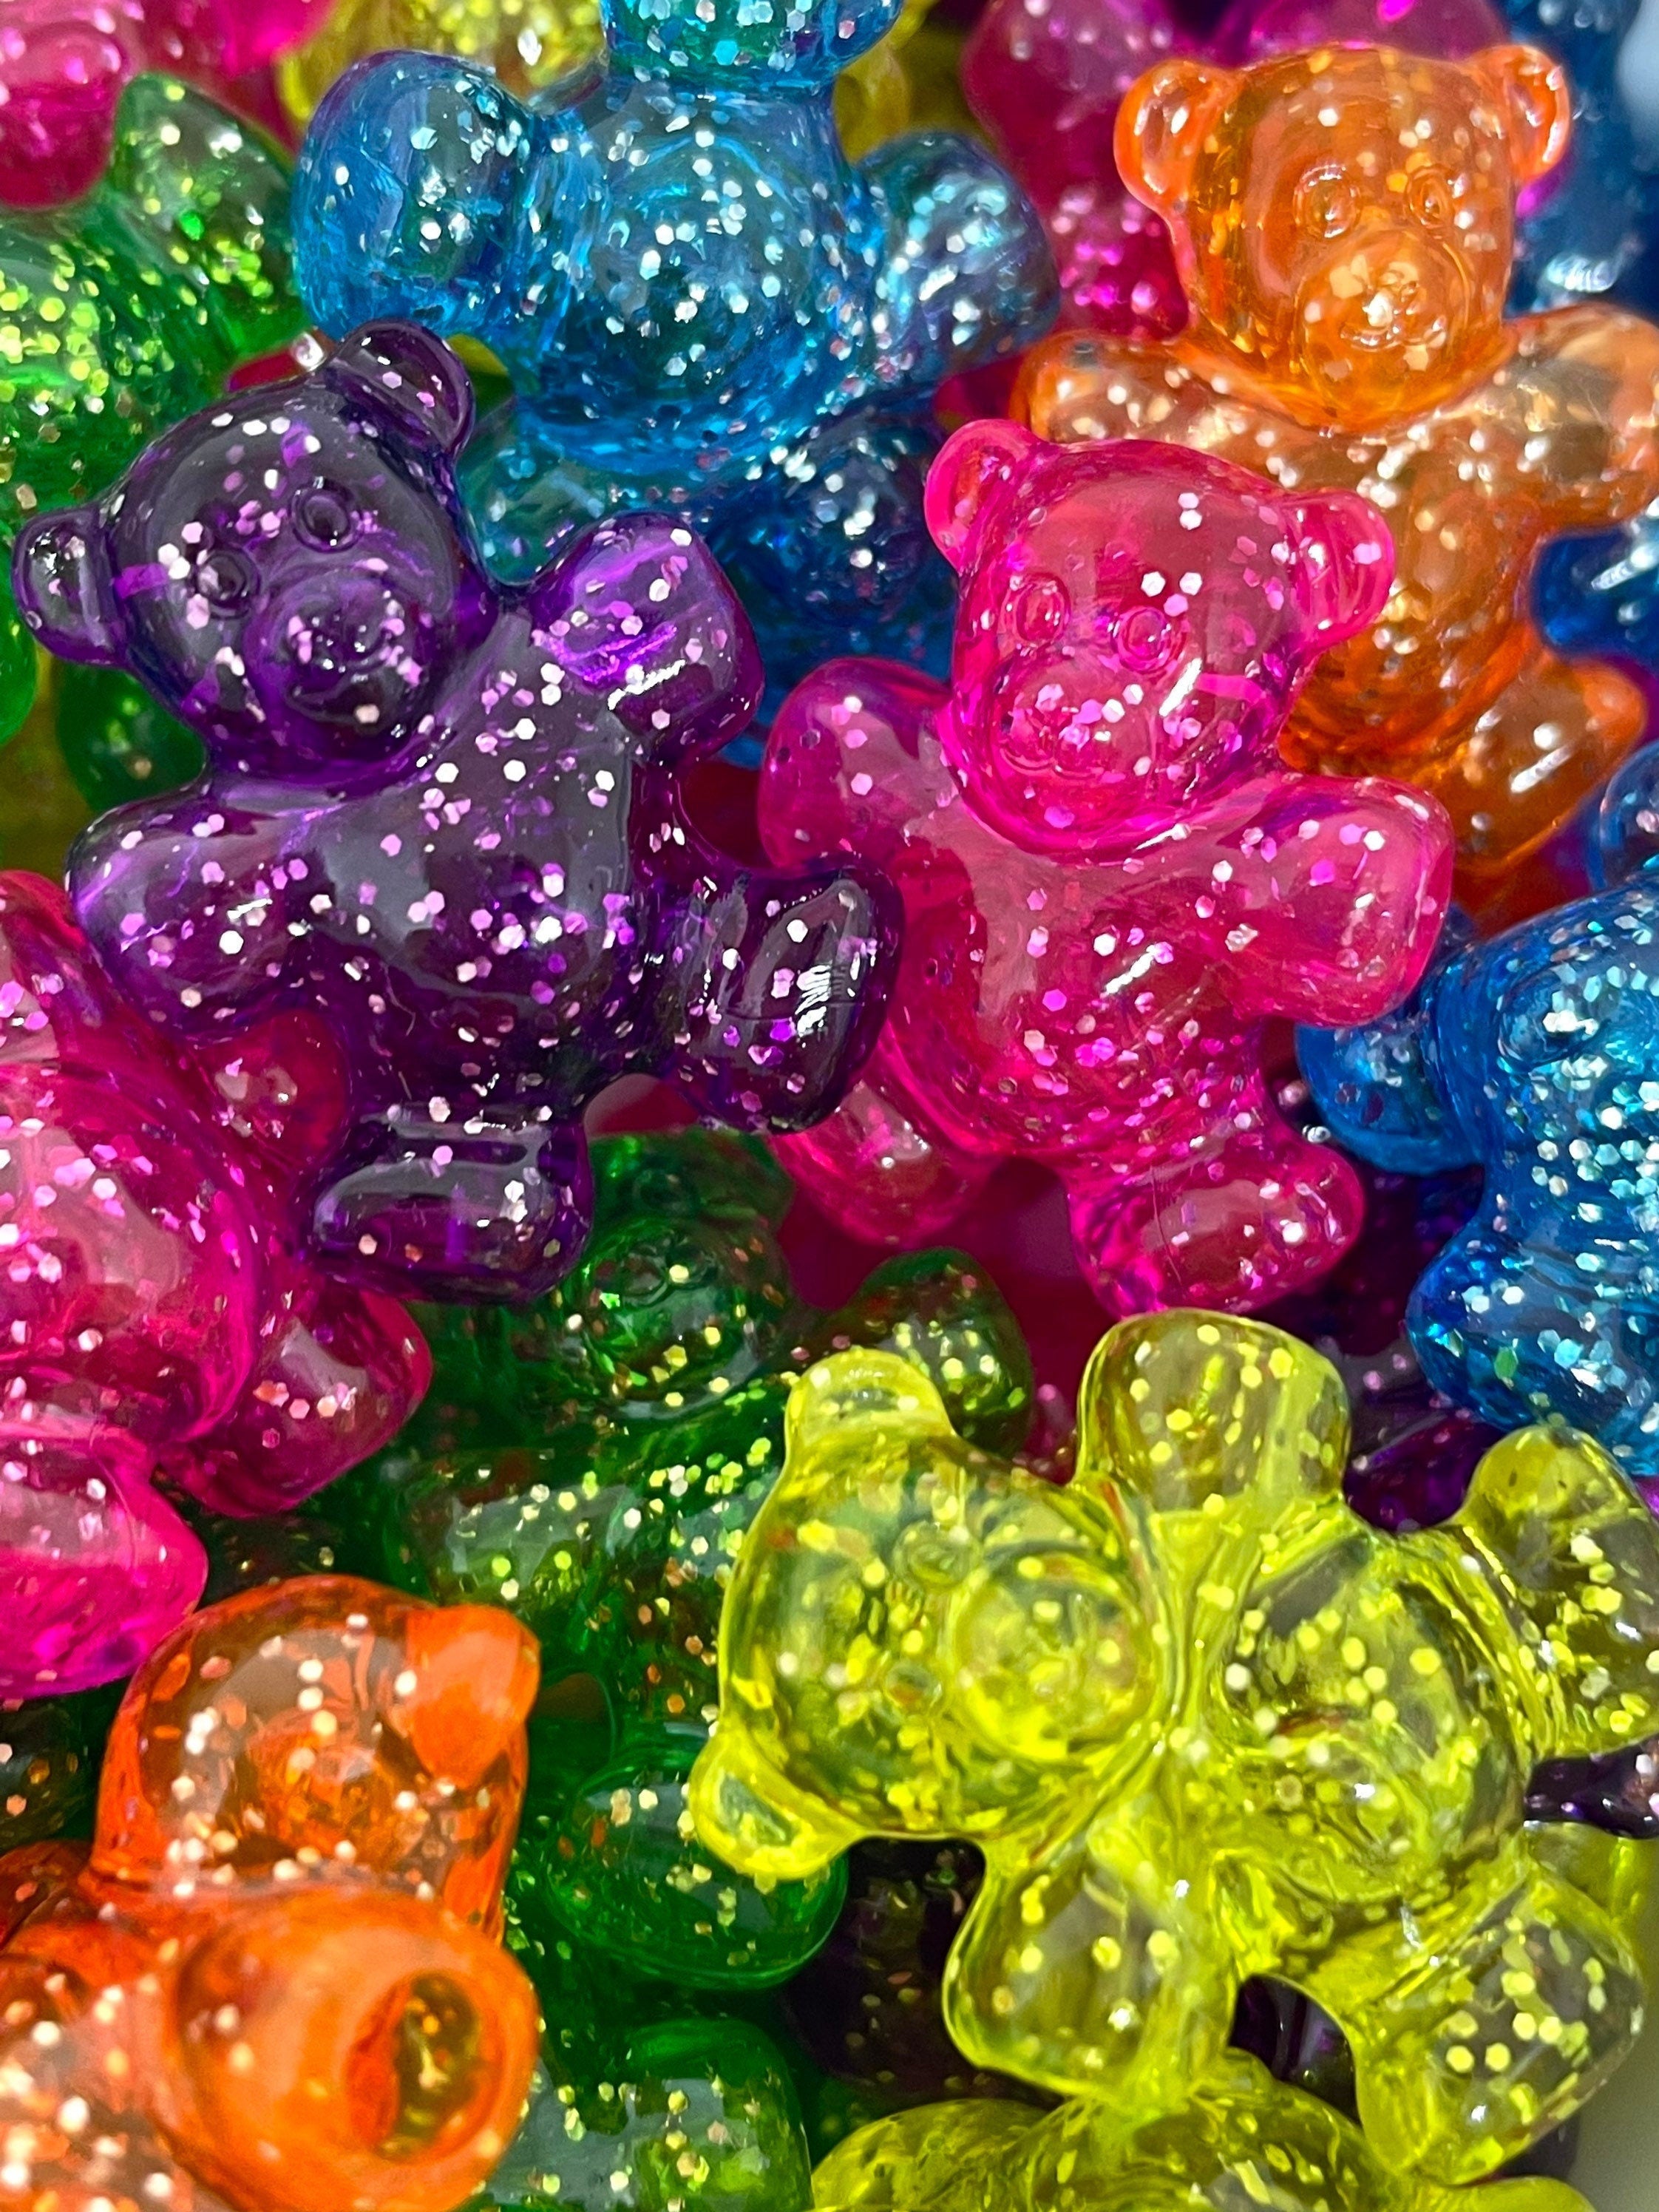 Jelly Kandi Beads from Japan, Pony Beads